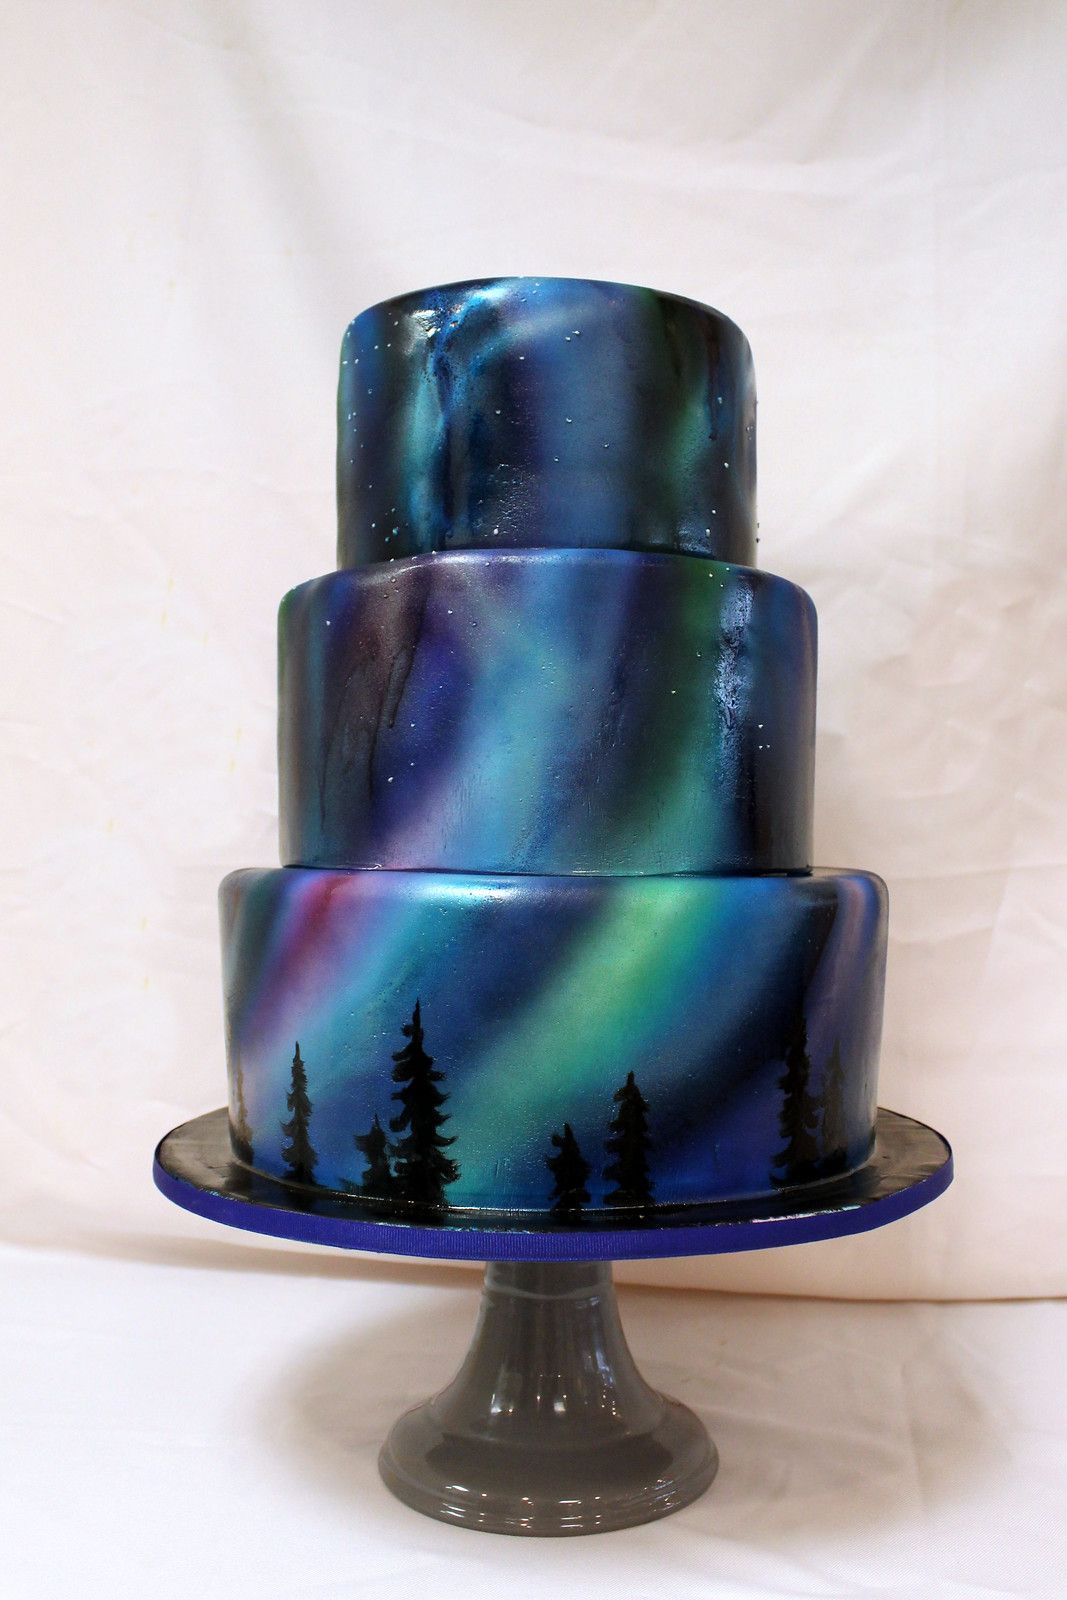 Northern Lights airbrushed cake -   16 cake Amazing lights ideas